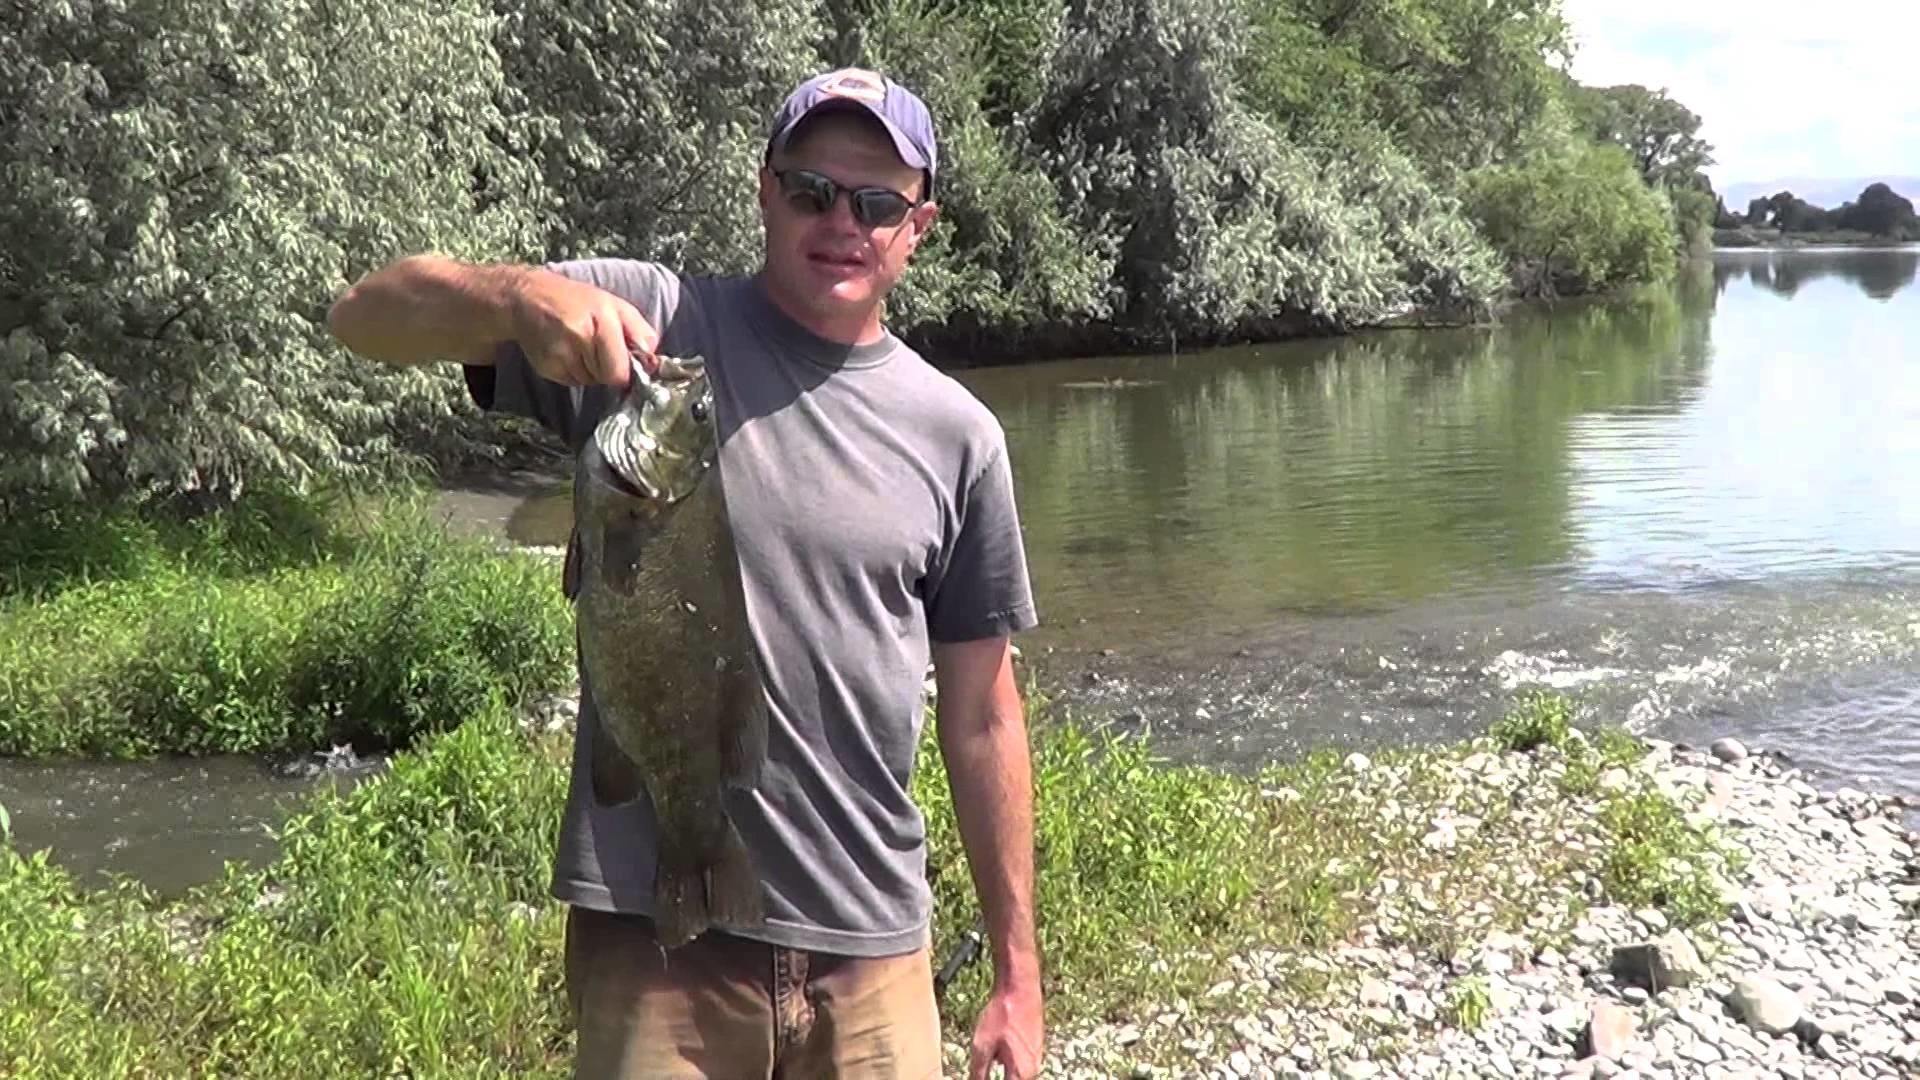 1920x1080 4 lb, 20 1/2 inch small mouth bass (Snake River, Idaho) - July 21st, 2015